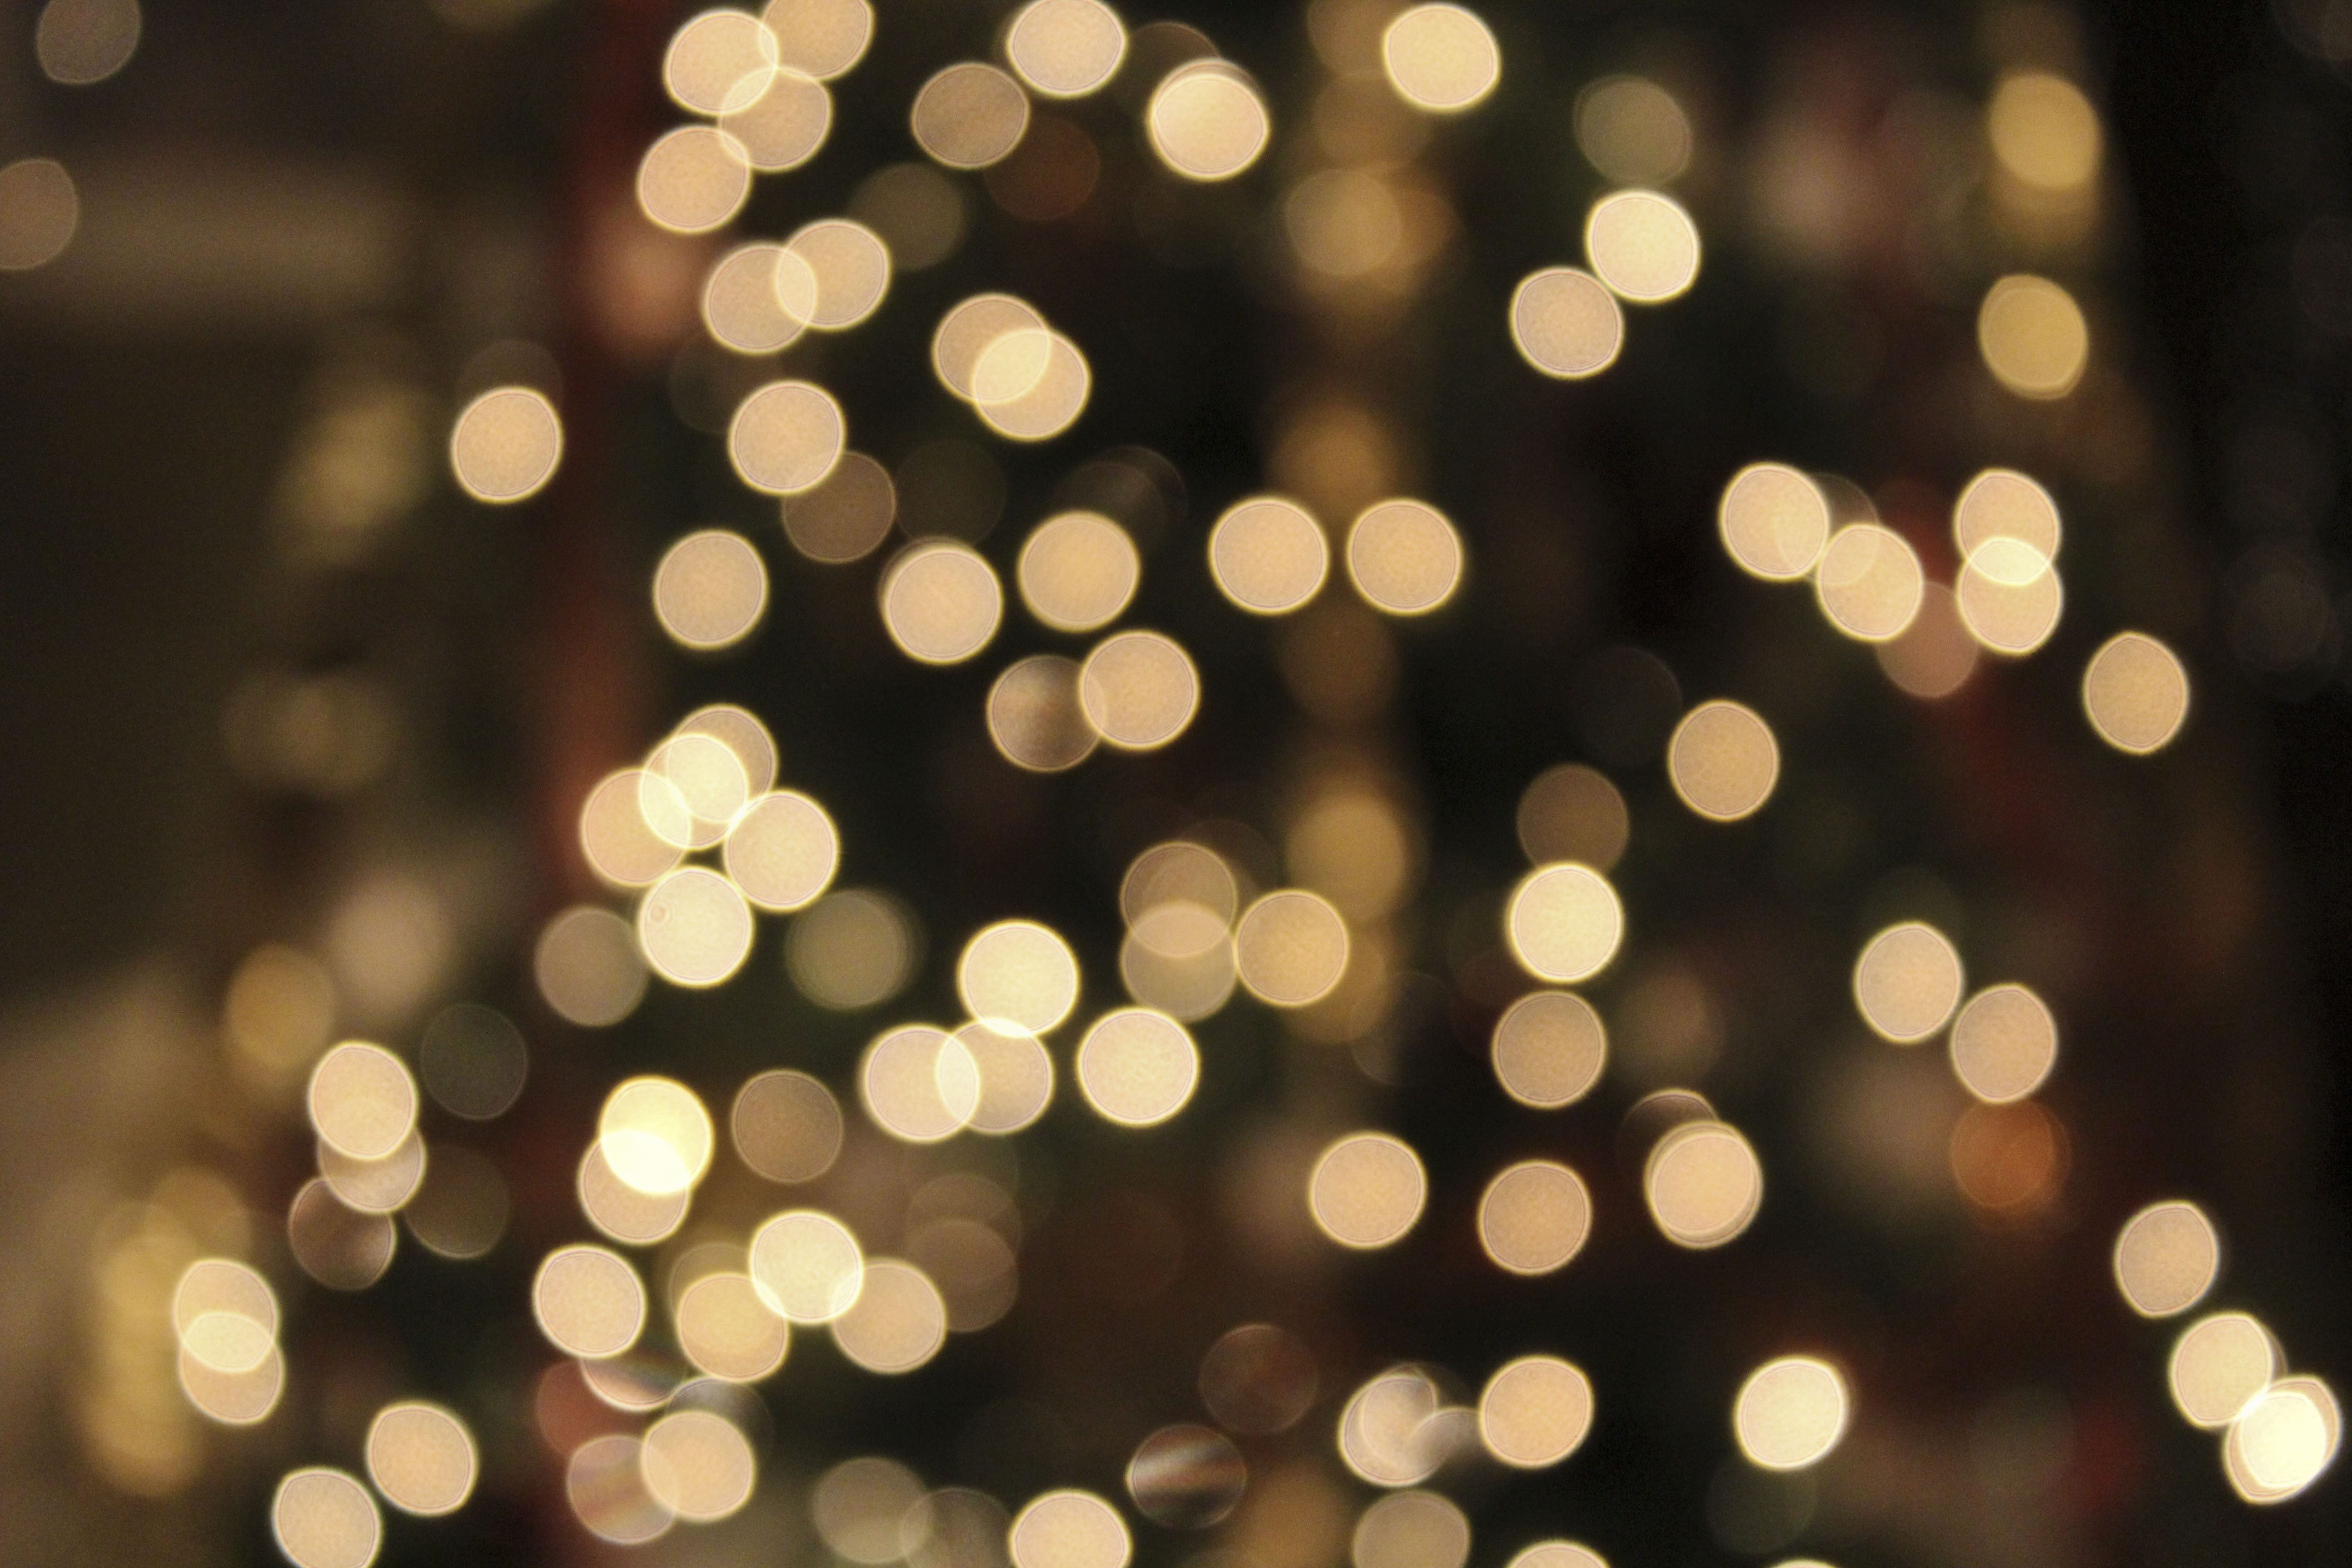 Bokeh/Blurred Christmas Lights (Soft) by pureoptic on DeviantArt